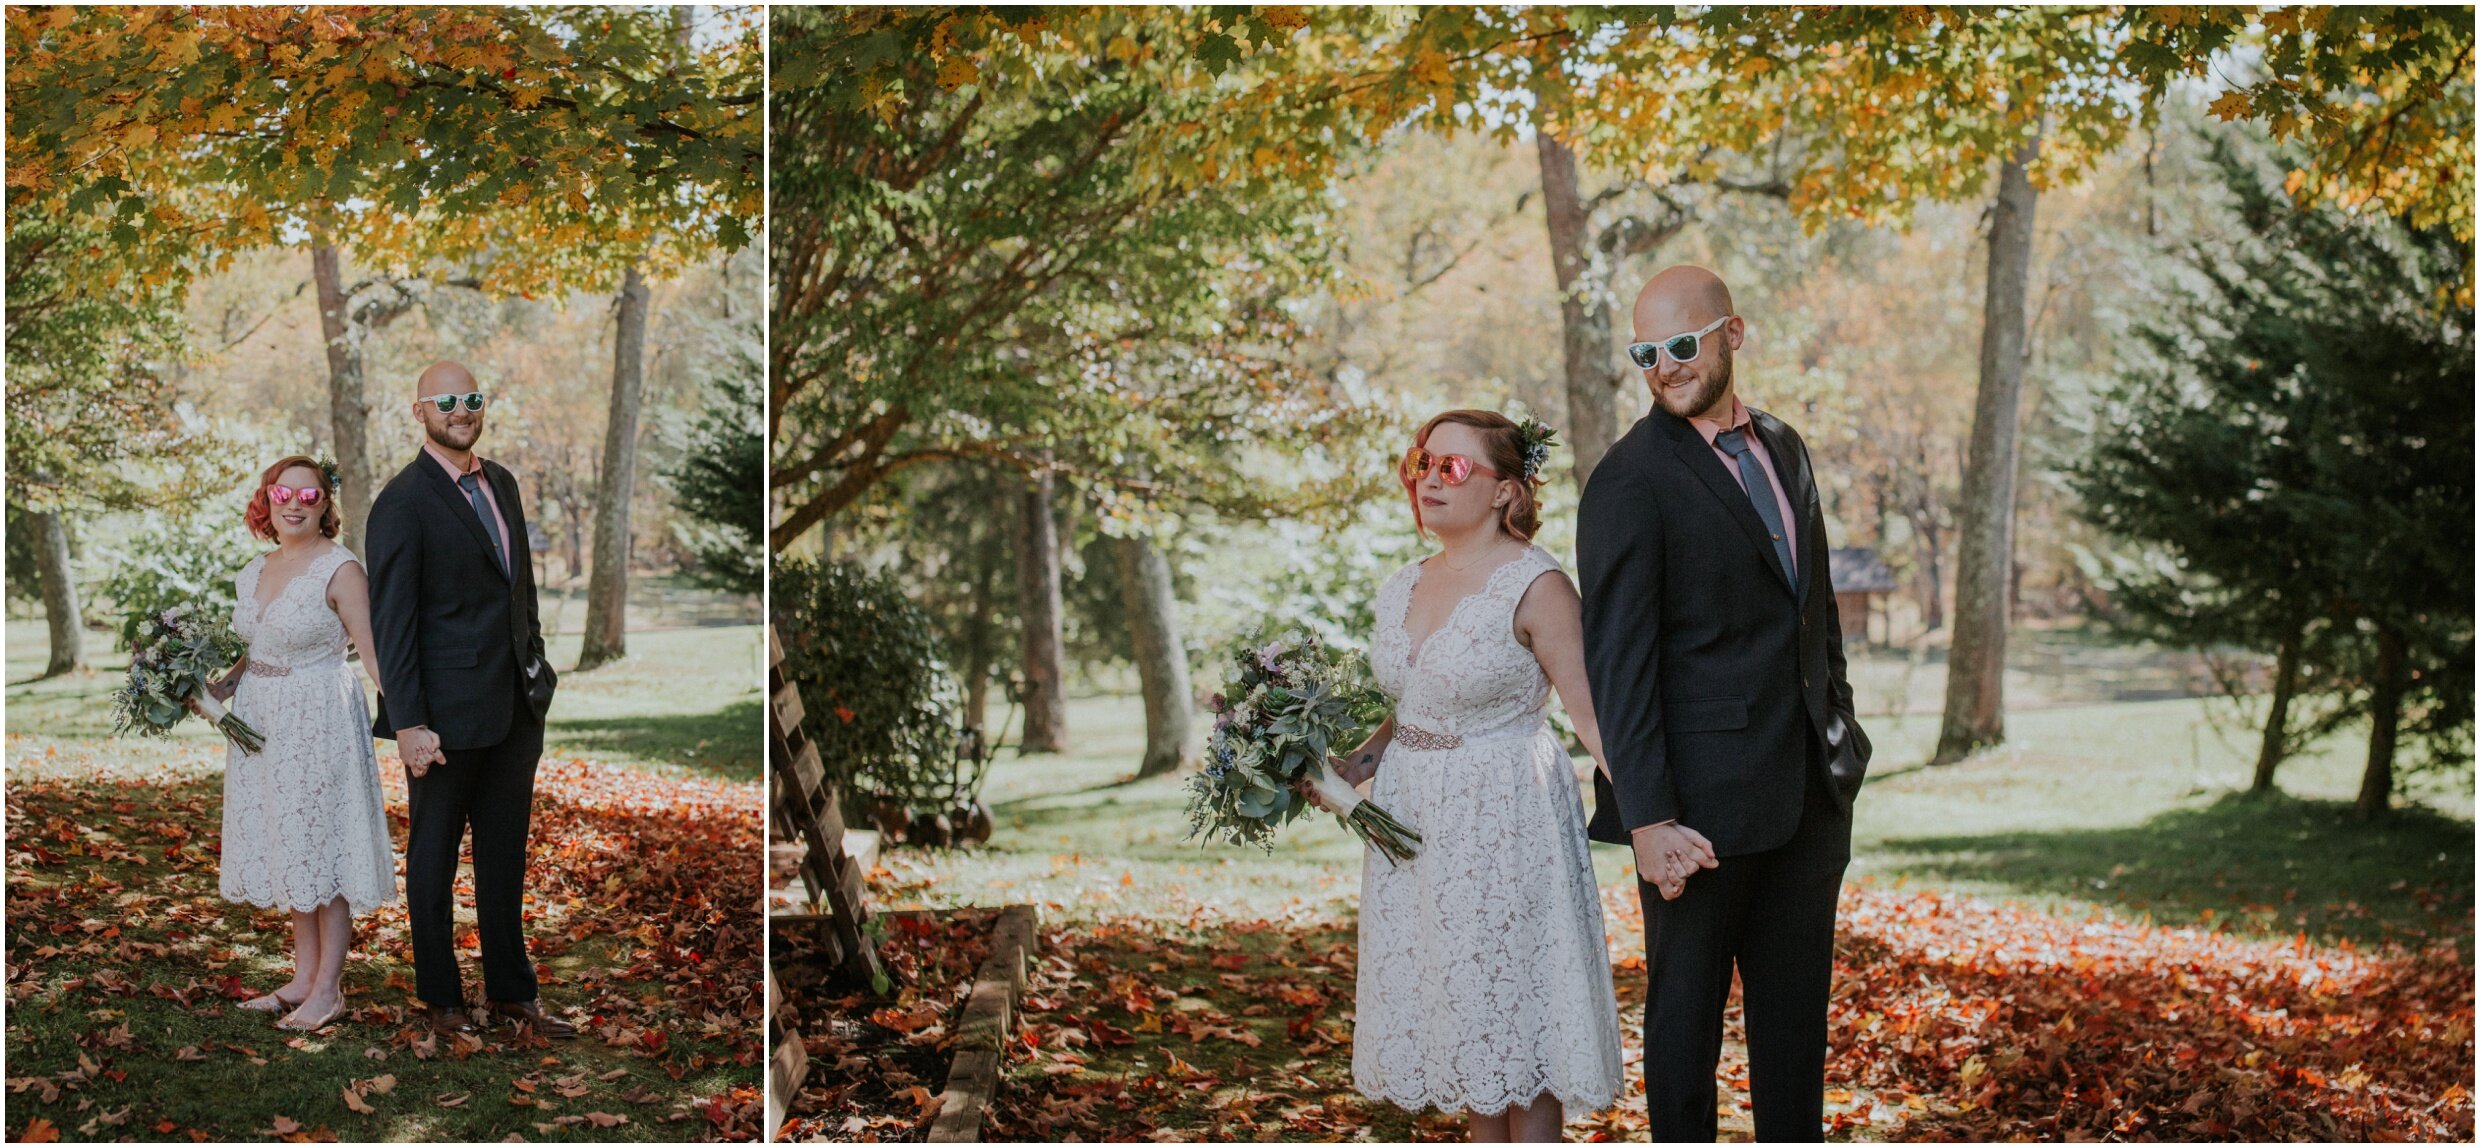 maryland-backyard-fall-intimate-fall-micro-wedding-katy-sergent-photography-virginia-tennessee-north-carolina-photographer_0054.jpg